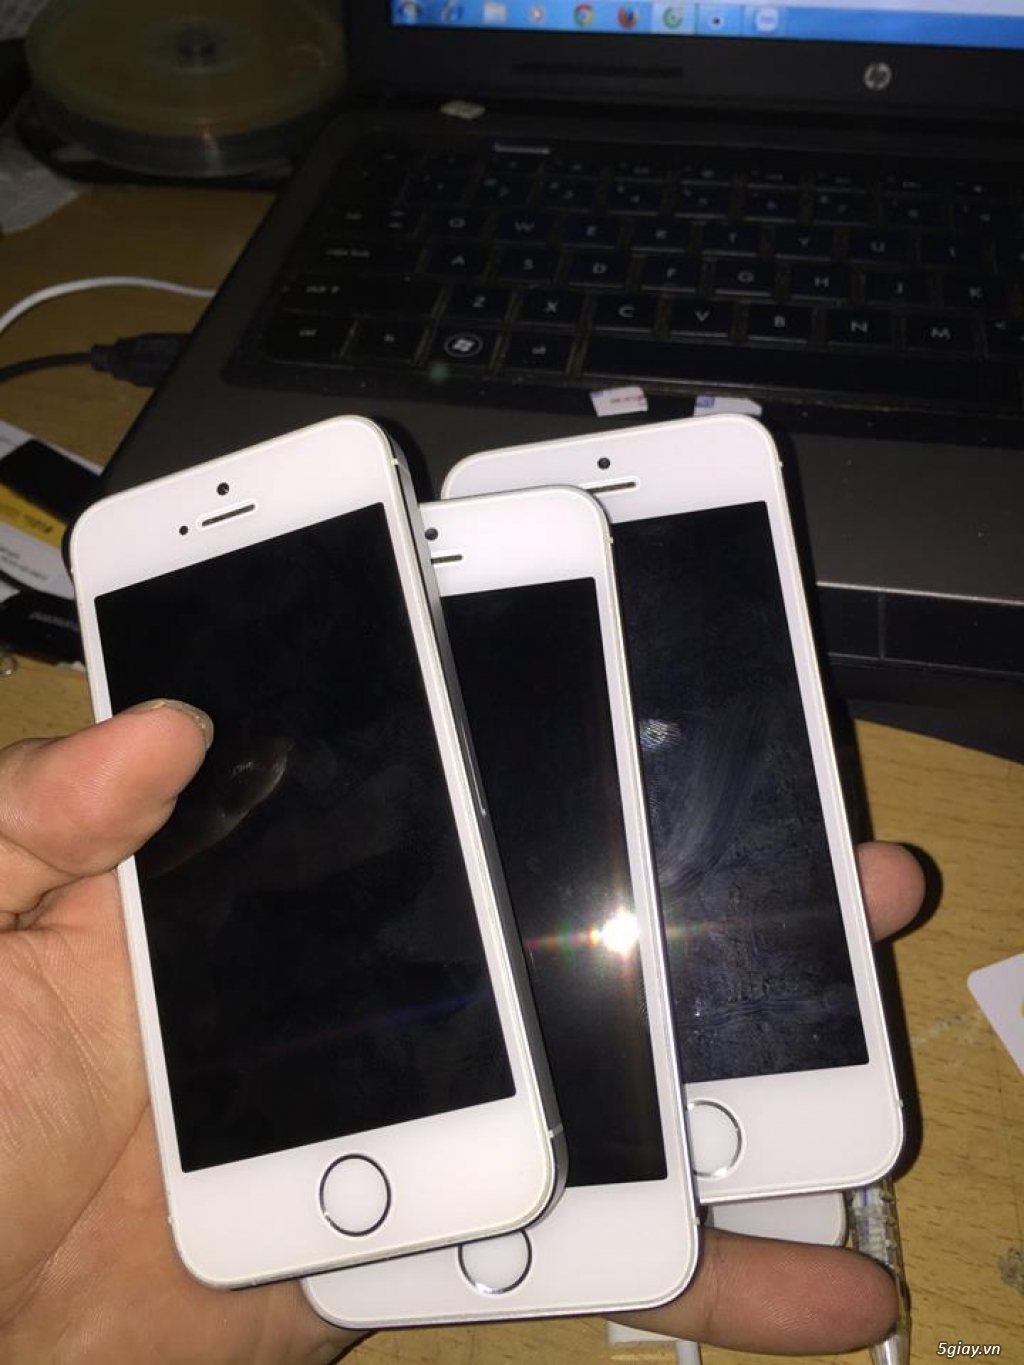 iPhone 5s gold Likenew 6t5, ip6 Qt 9t9, ip 6 Plus 16 trắng new fullbox nguyên seal bảo hành 1 đổi 1